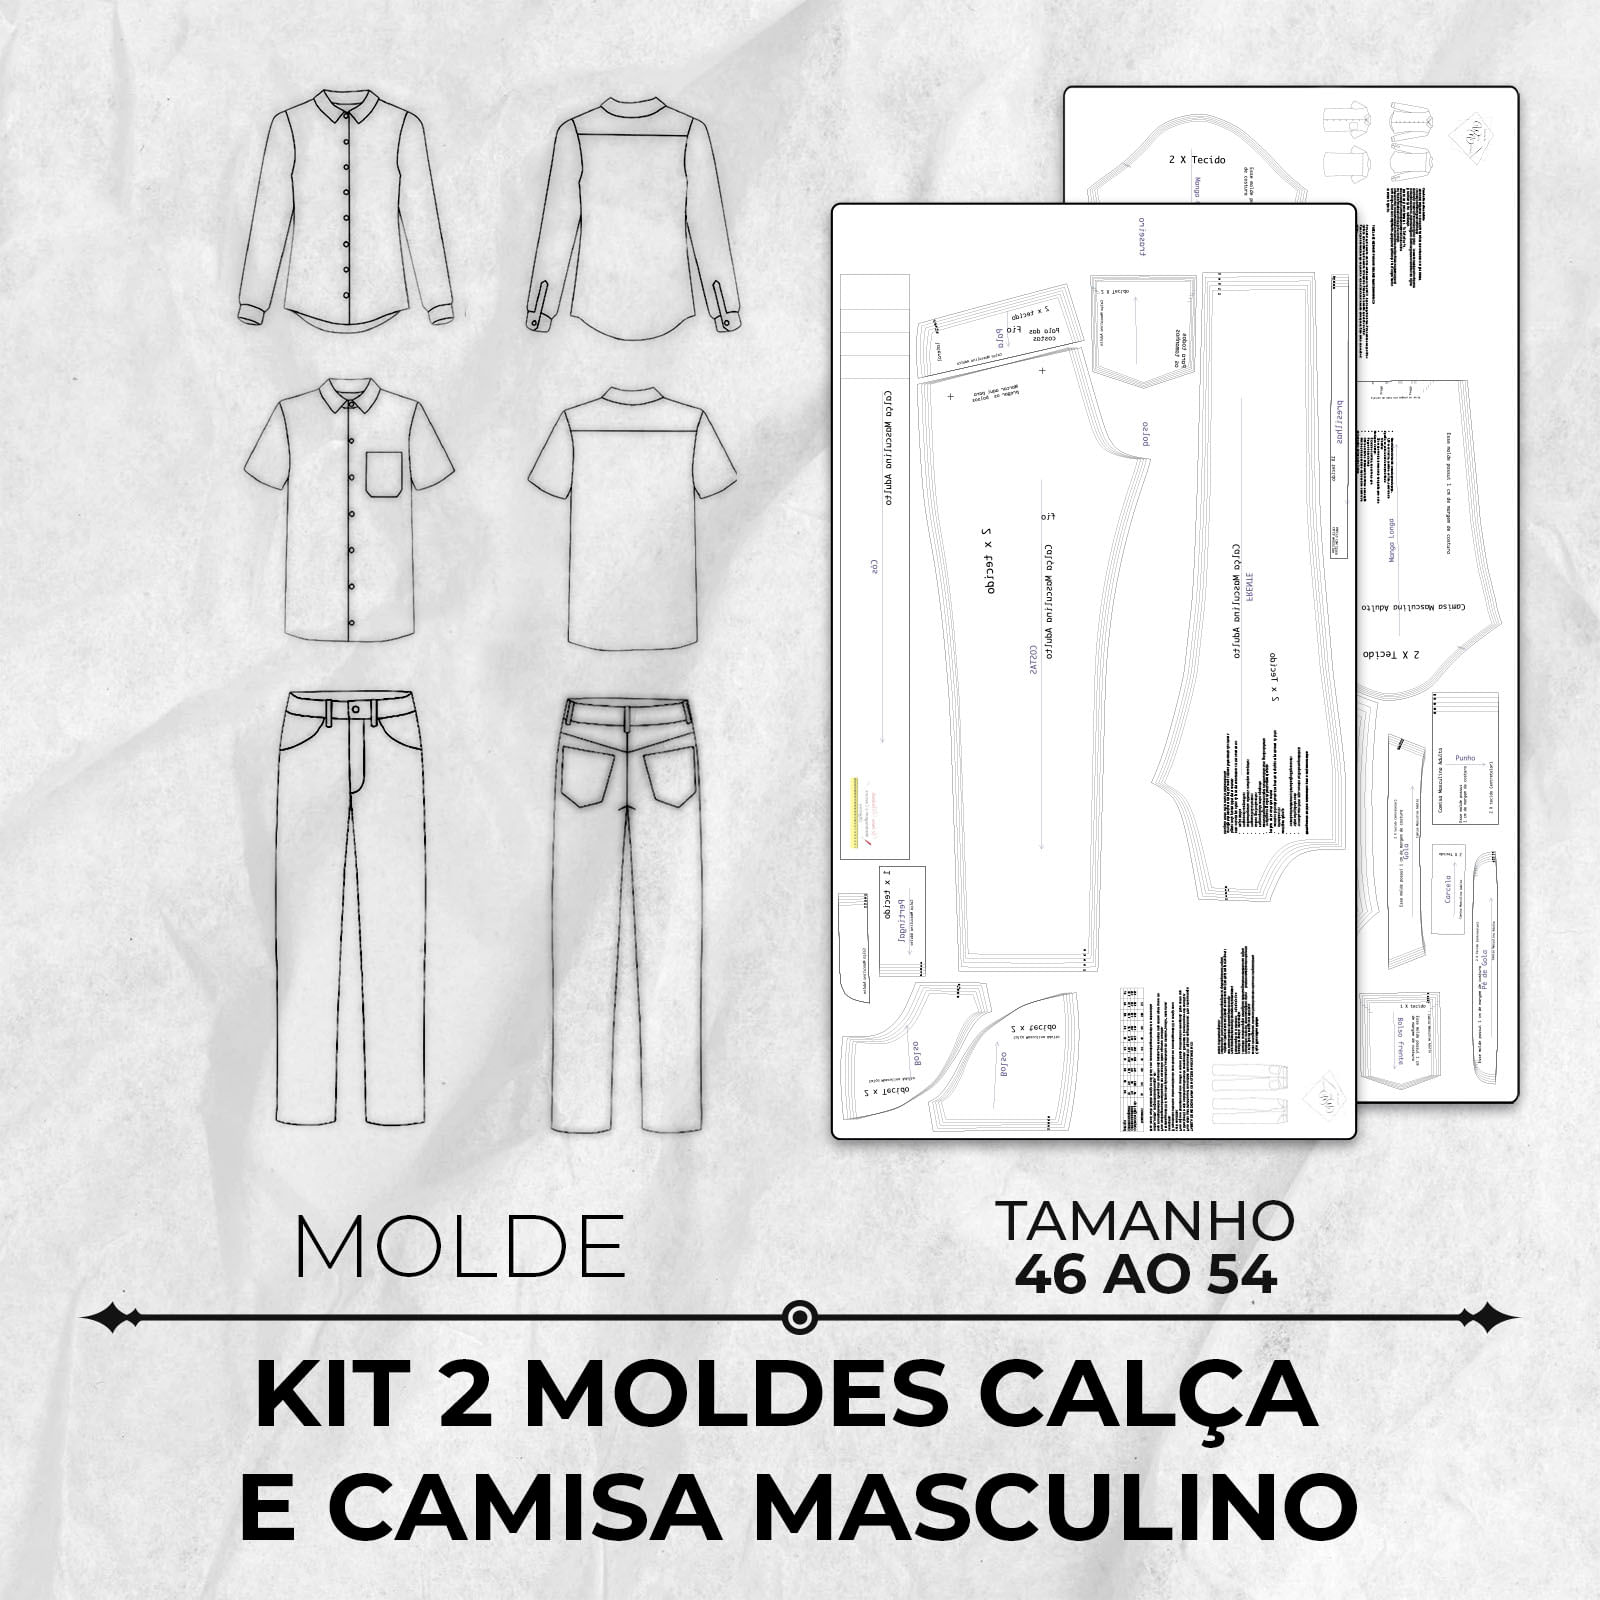 Kit 2 moldes calça e camisa masculino tamanho 46 ao 54 by Wania Machado